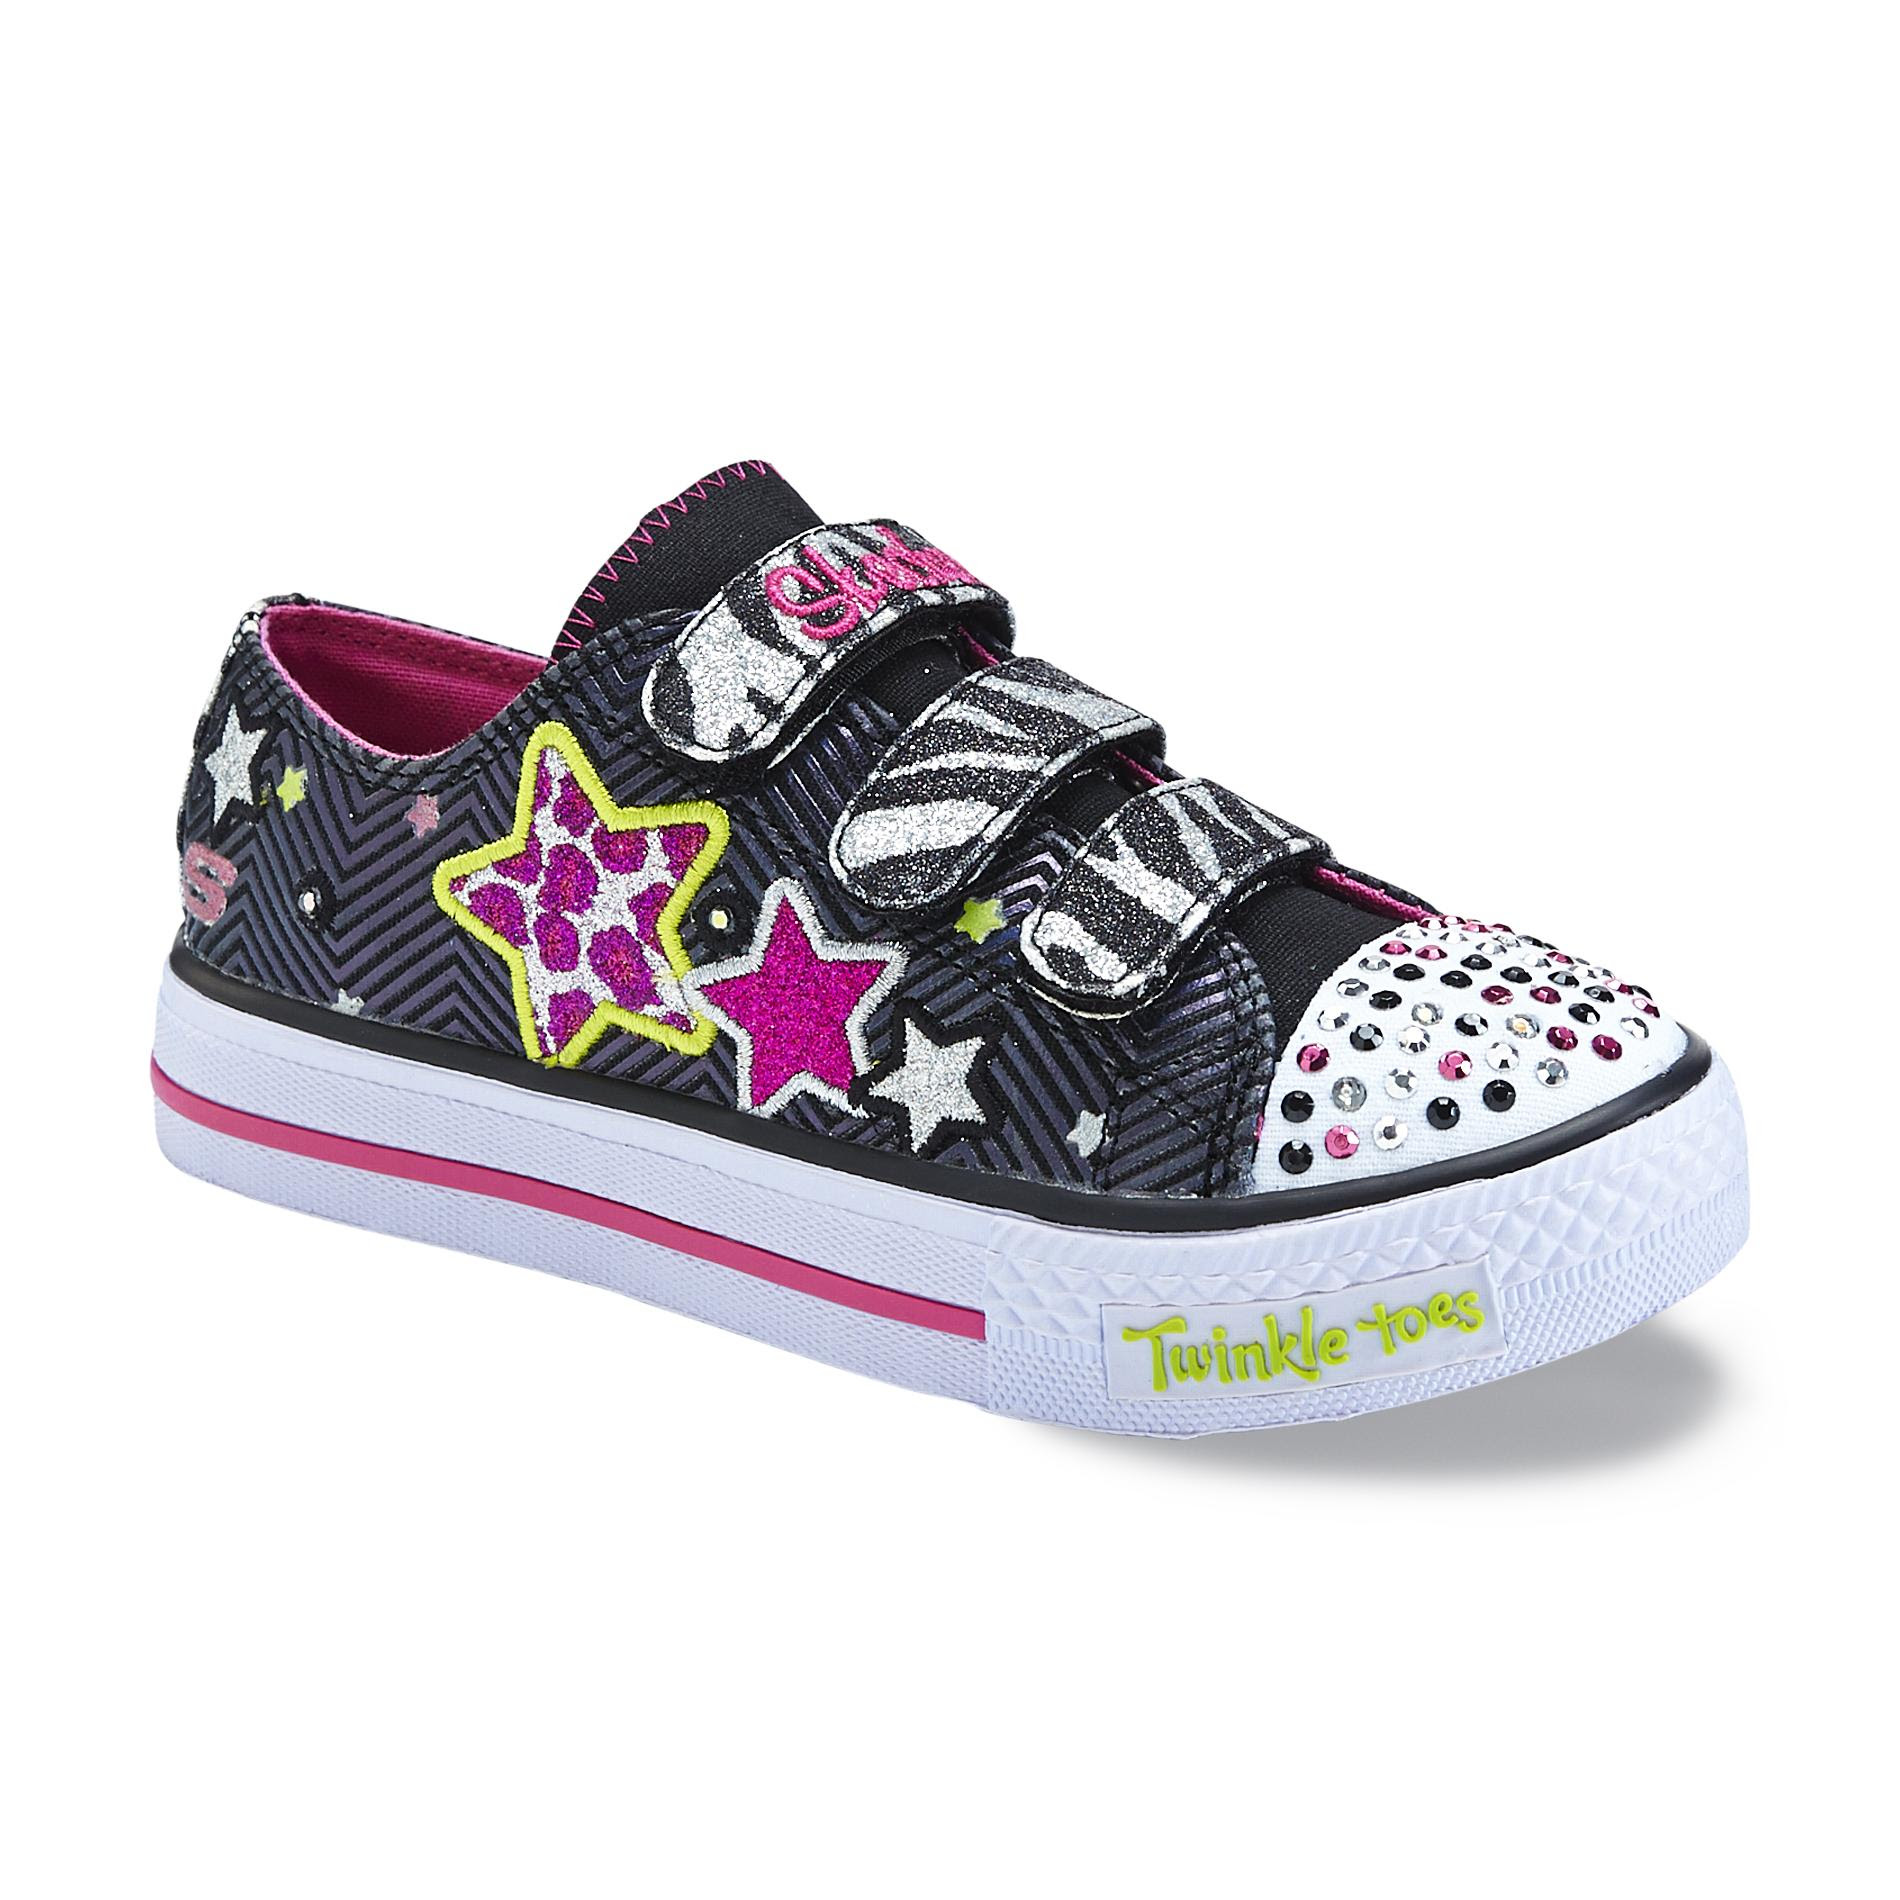 Skechers Girls Sneakers: Skechers Girl's Twinkle Toes Wild Black Light-Up Sneakers 11 - (Toddler/Youth)